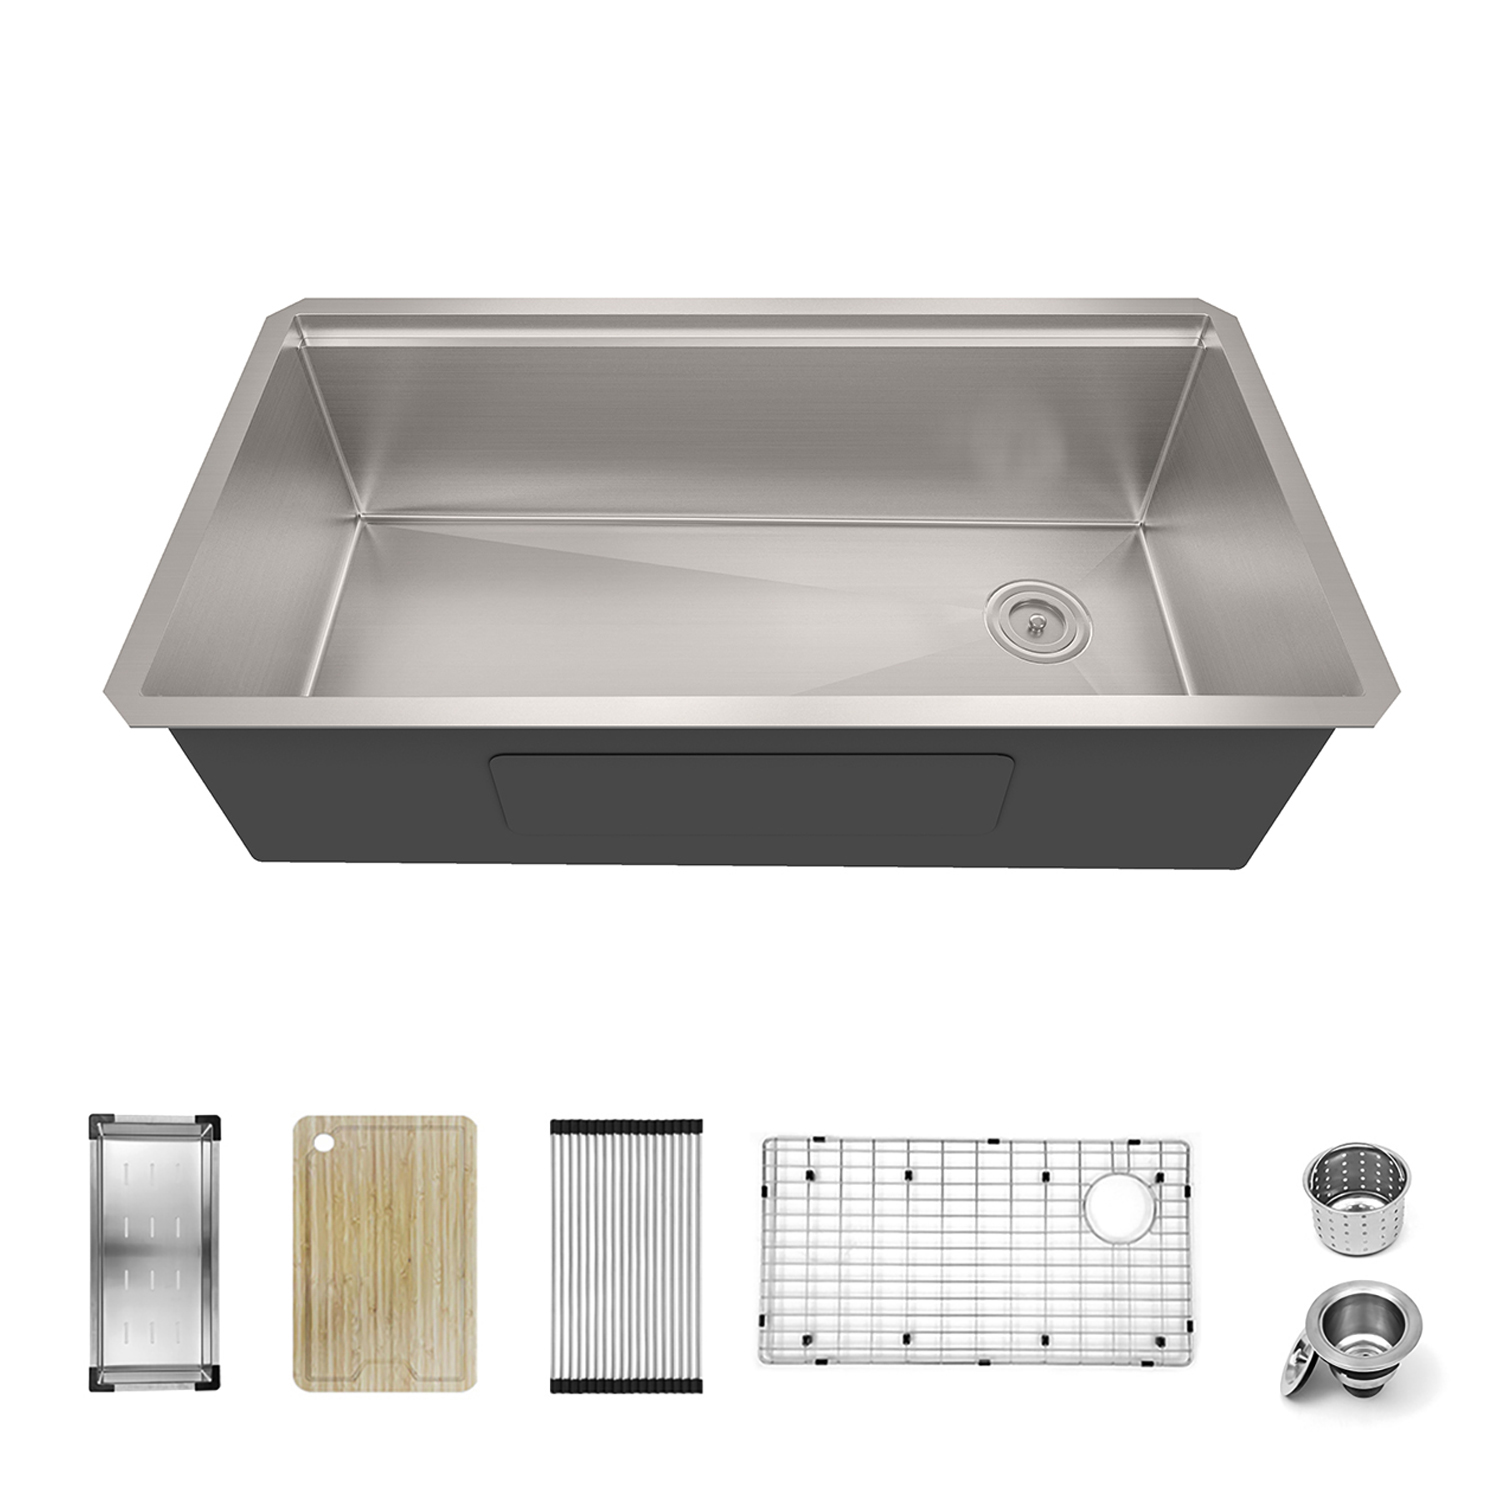 KSS0002S-OL 30" 16 Gauge Single Bowl 304 Stainless Steel Workstation Undermount Kitchen Sink With Accessories